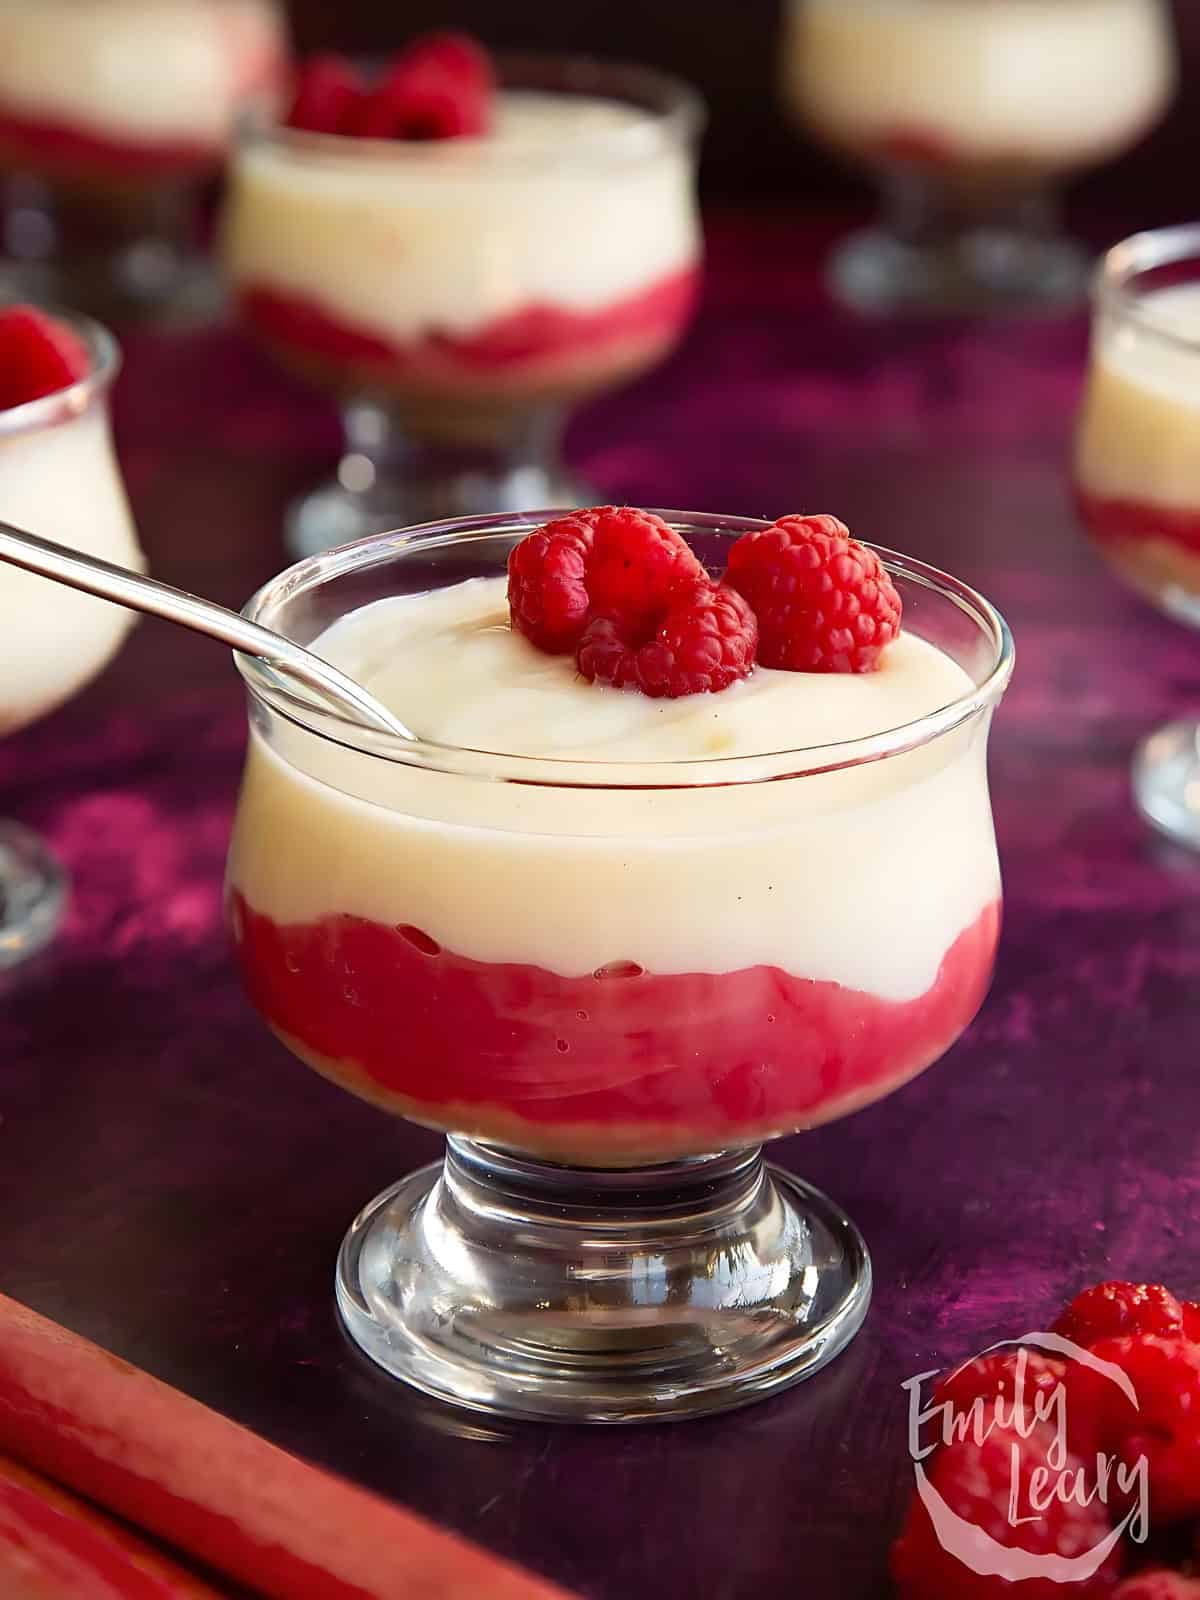 Rhubarb custard pudding topped with raspberries.